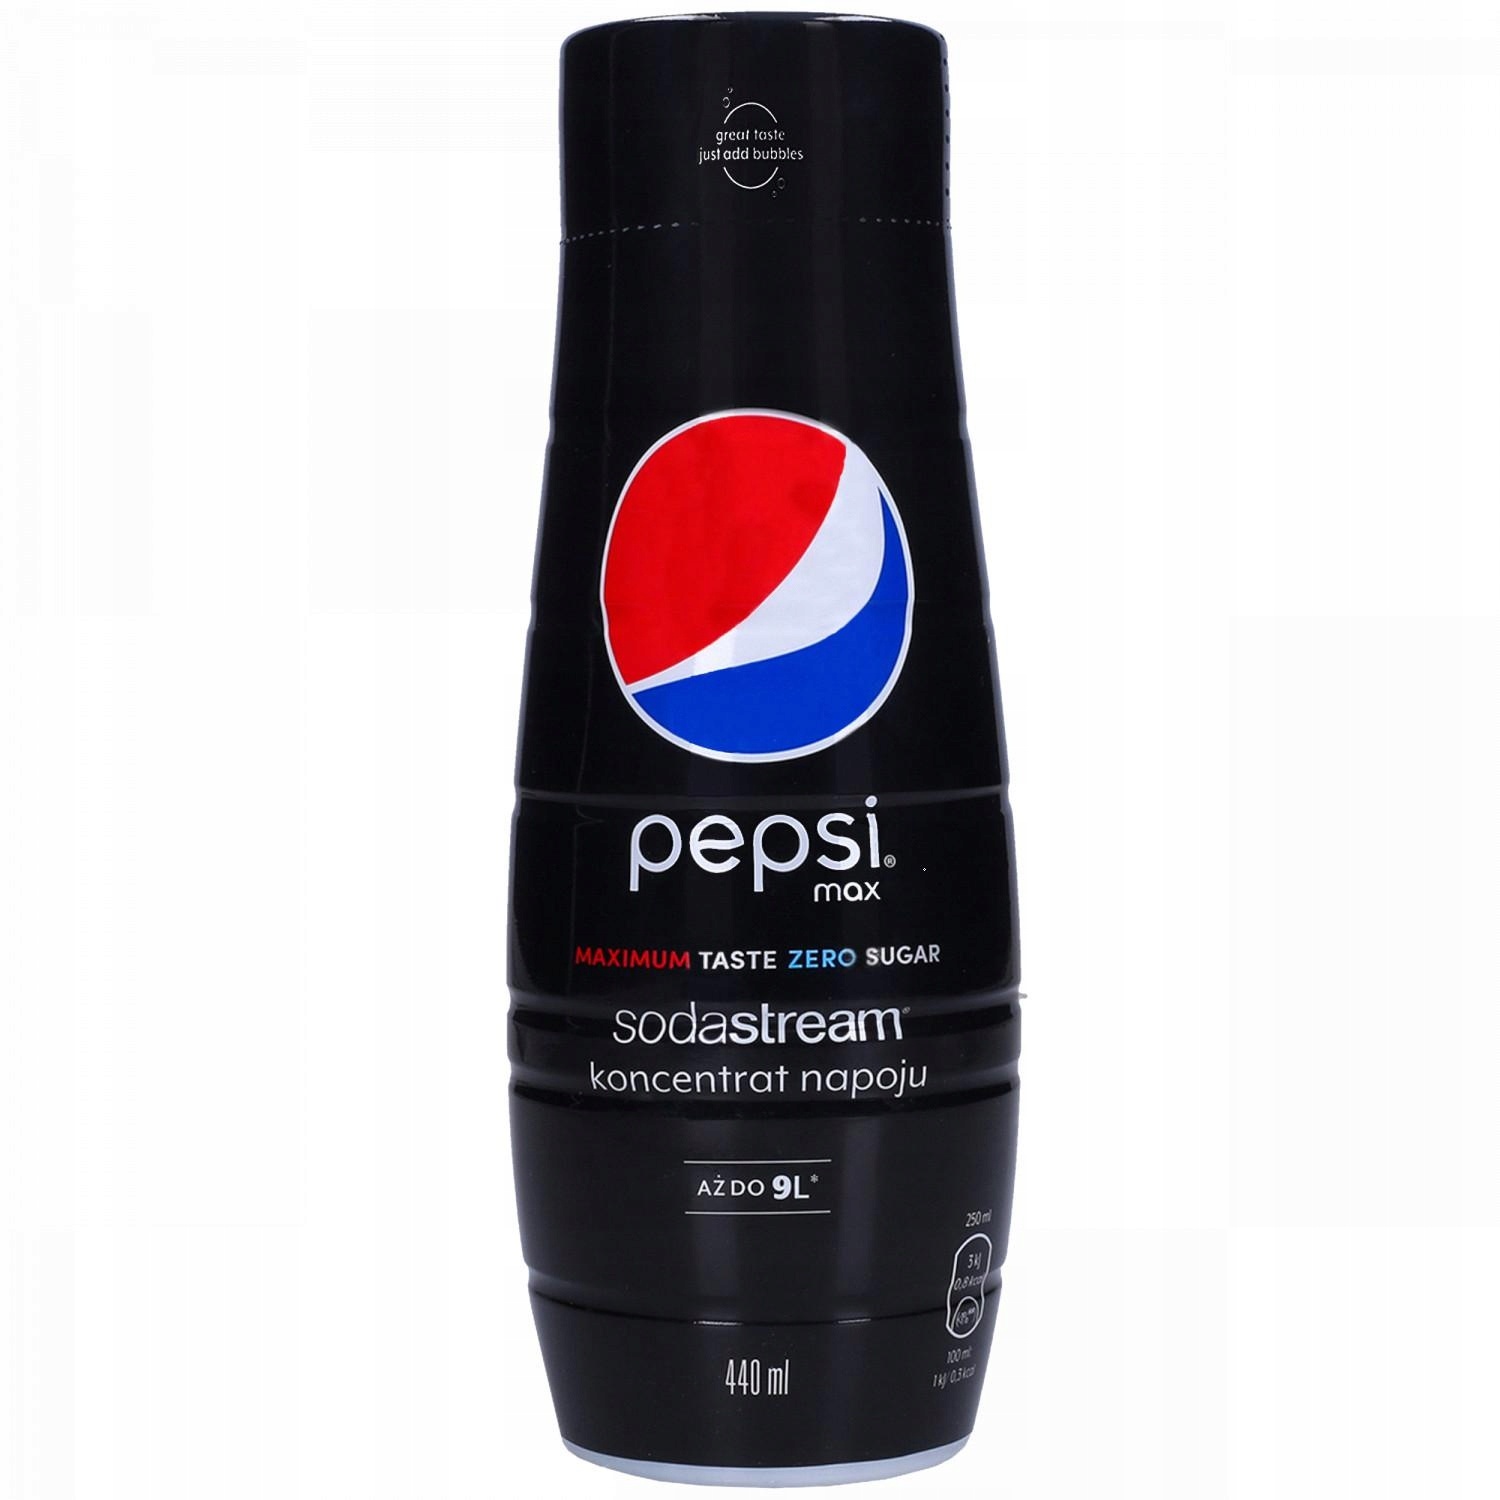 Pepsi max lime - Sodastream - 440 ml